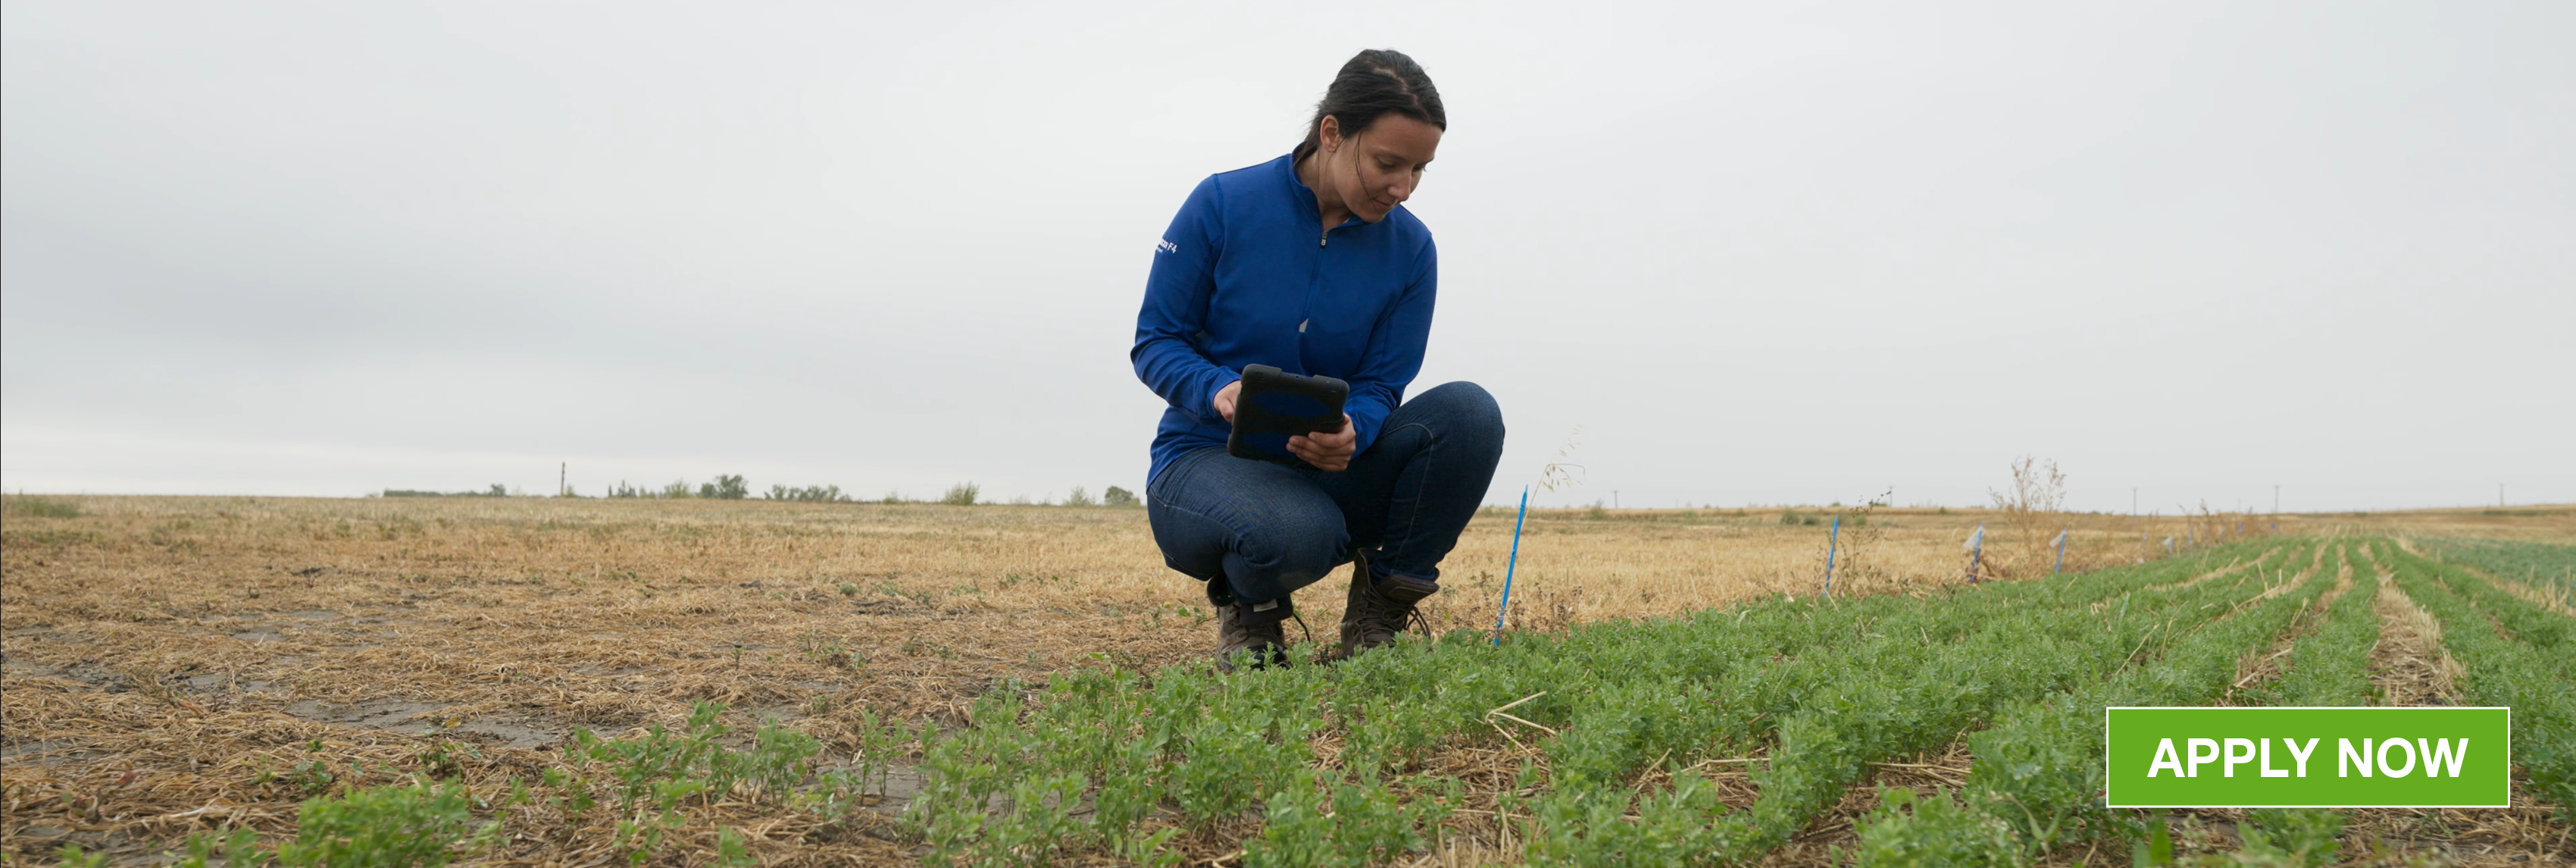 a person kneeling in a field examining a crop